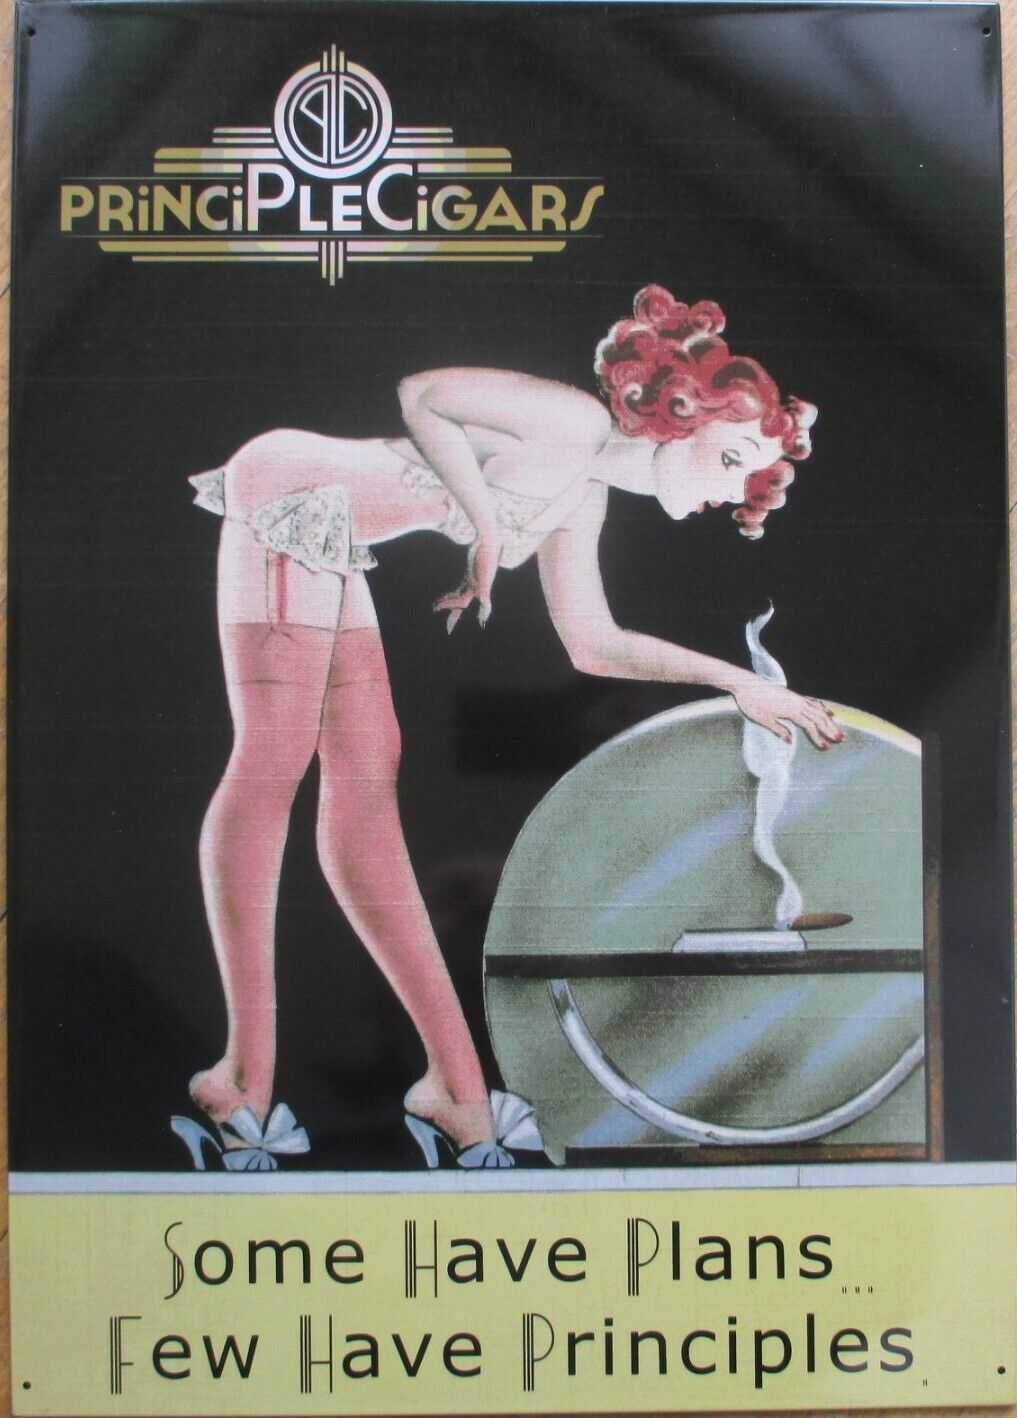 Art Deco 1940s Pinup Girl 'Principle Cigars' Tin Advertising Sign - Risque